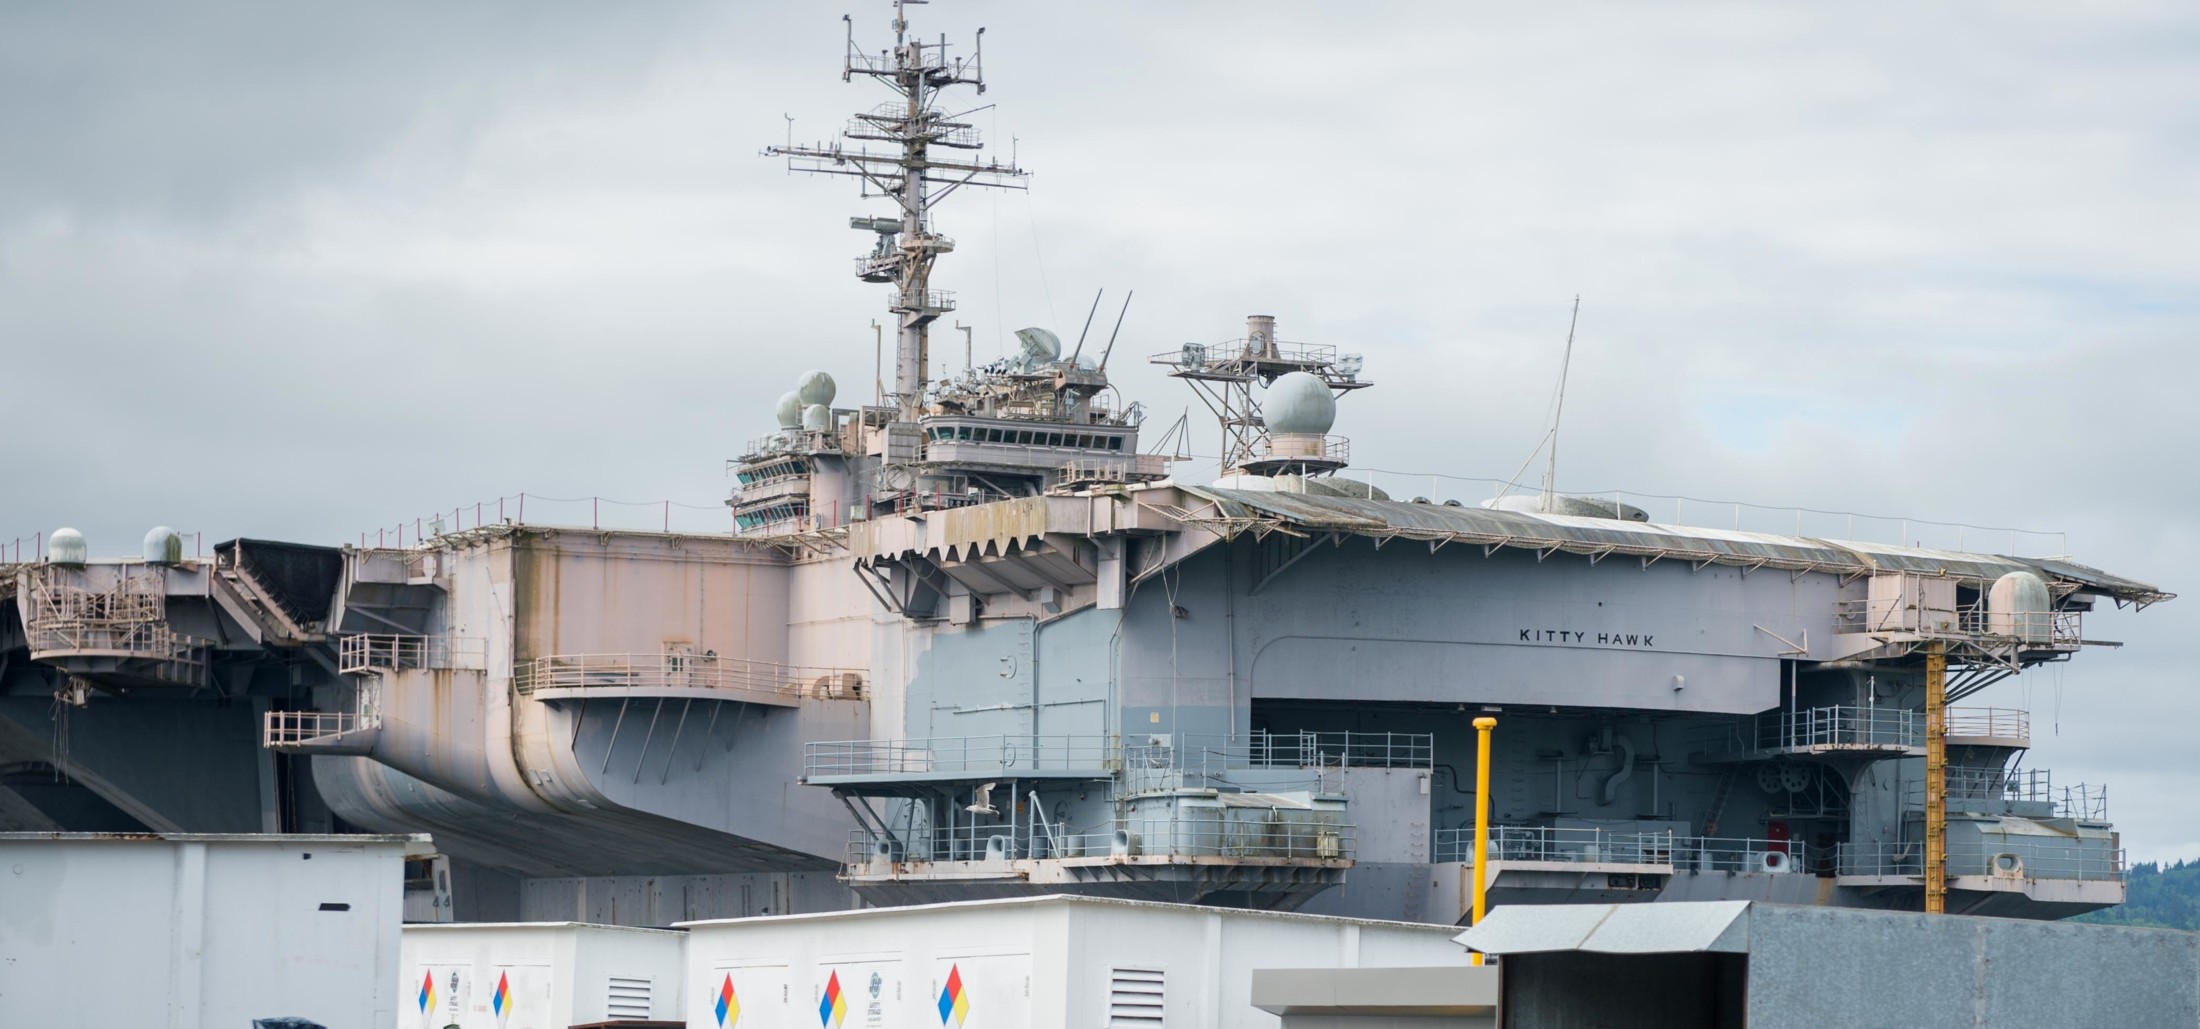 cv-63 uss kitty hawk aircraft carrier us navy puget sound naval shipyard washington mothballed in reserve 2017 225